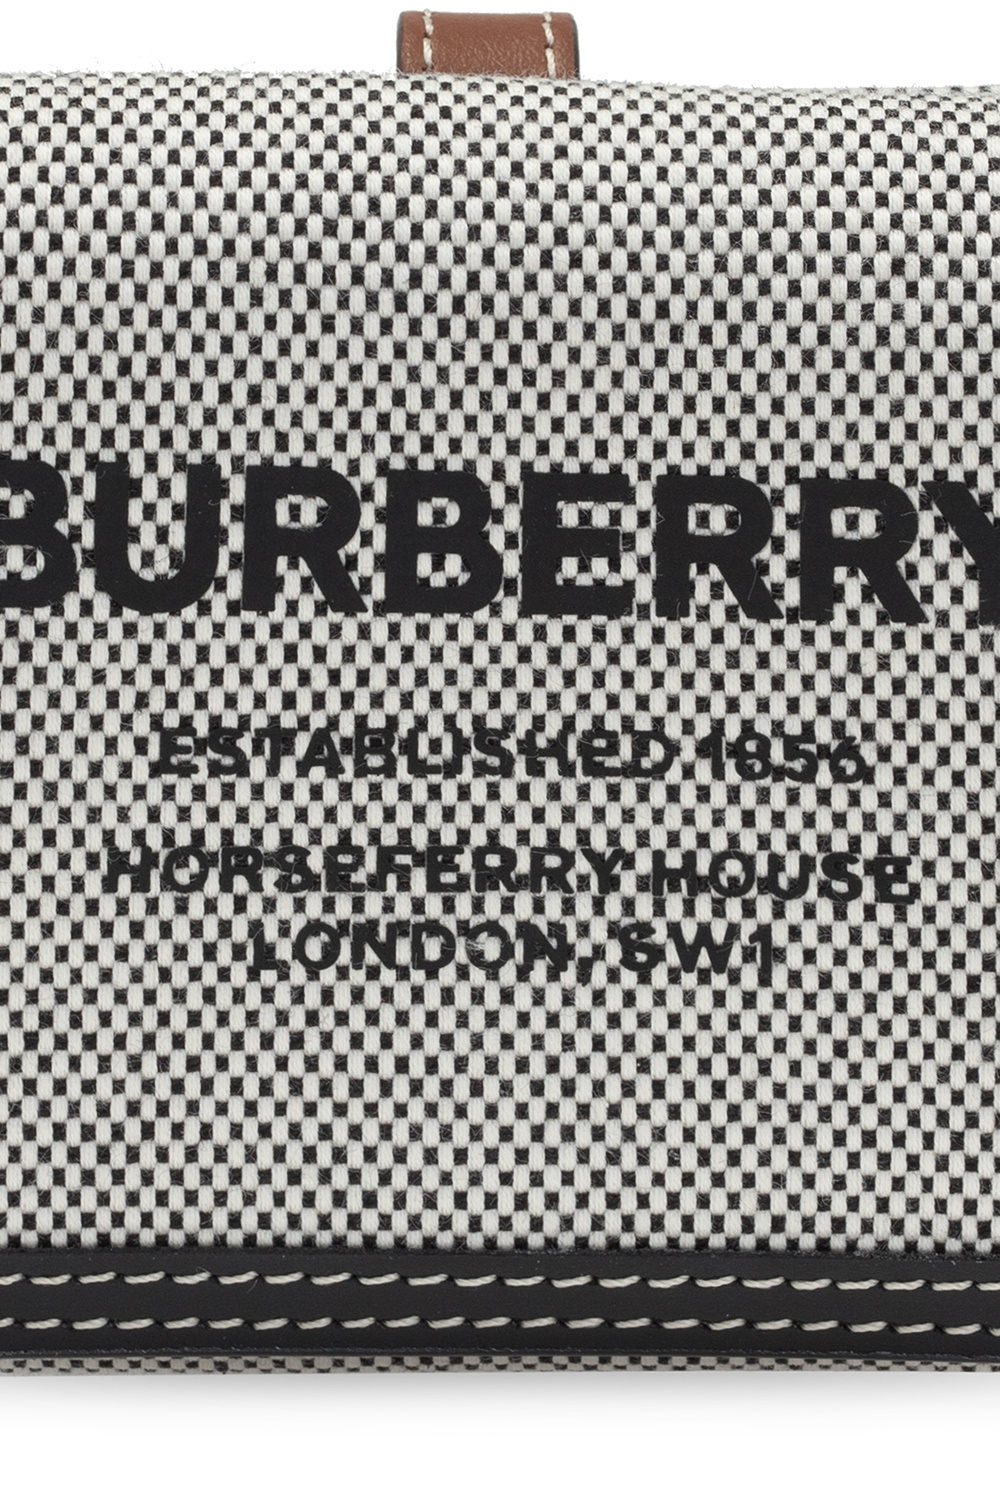 Burberry burberry brown shirt